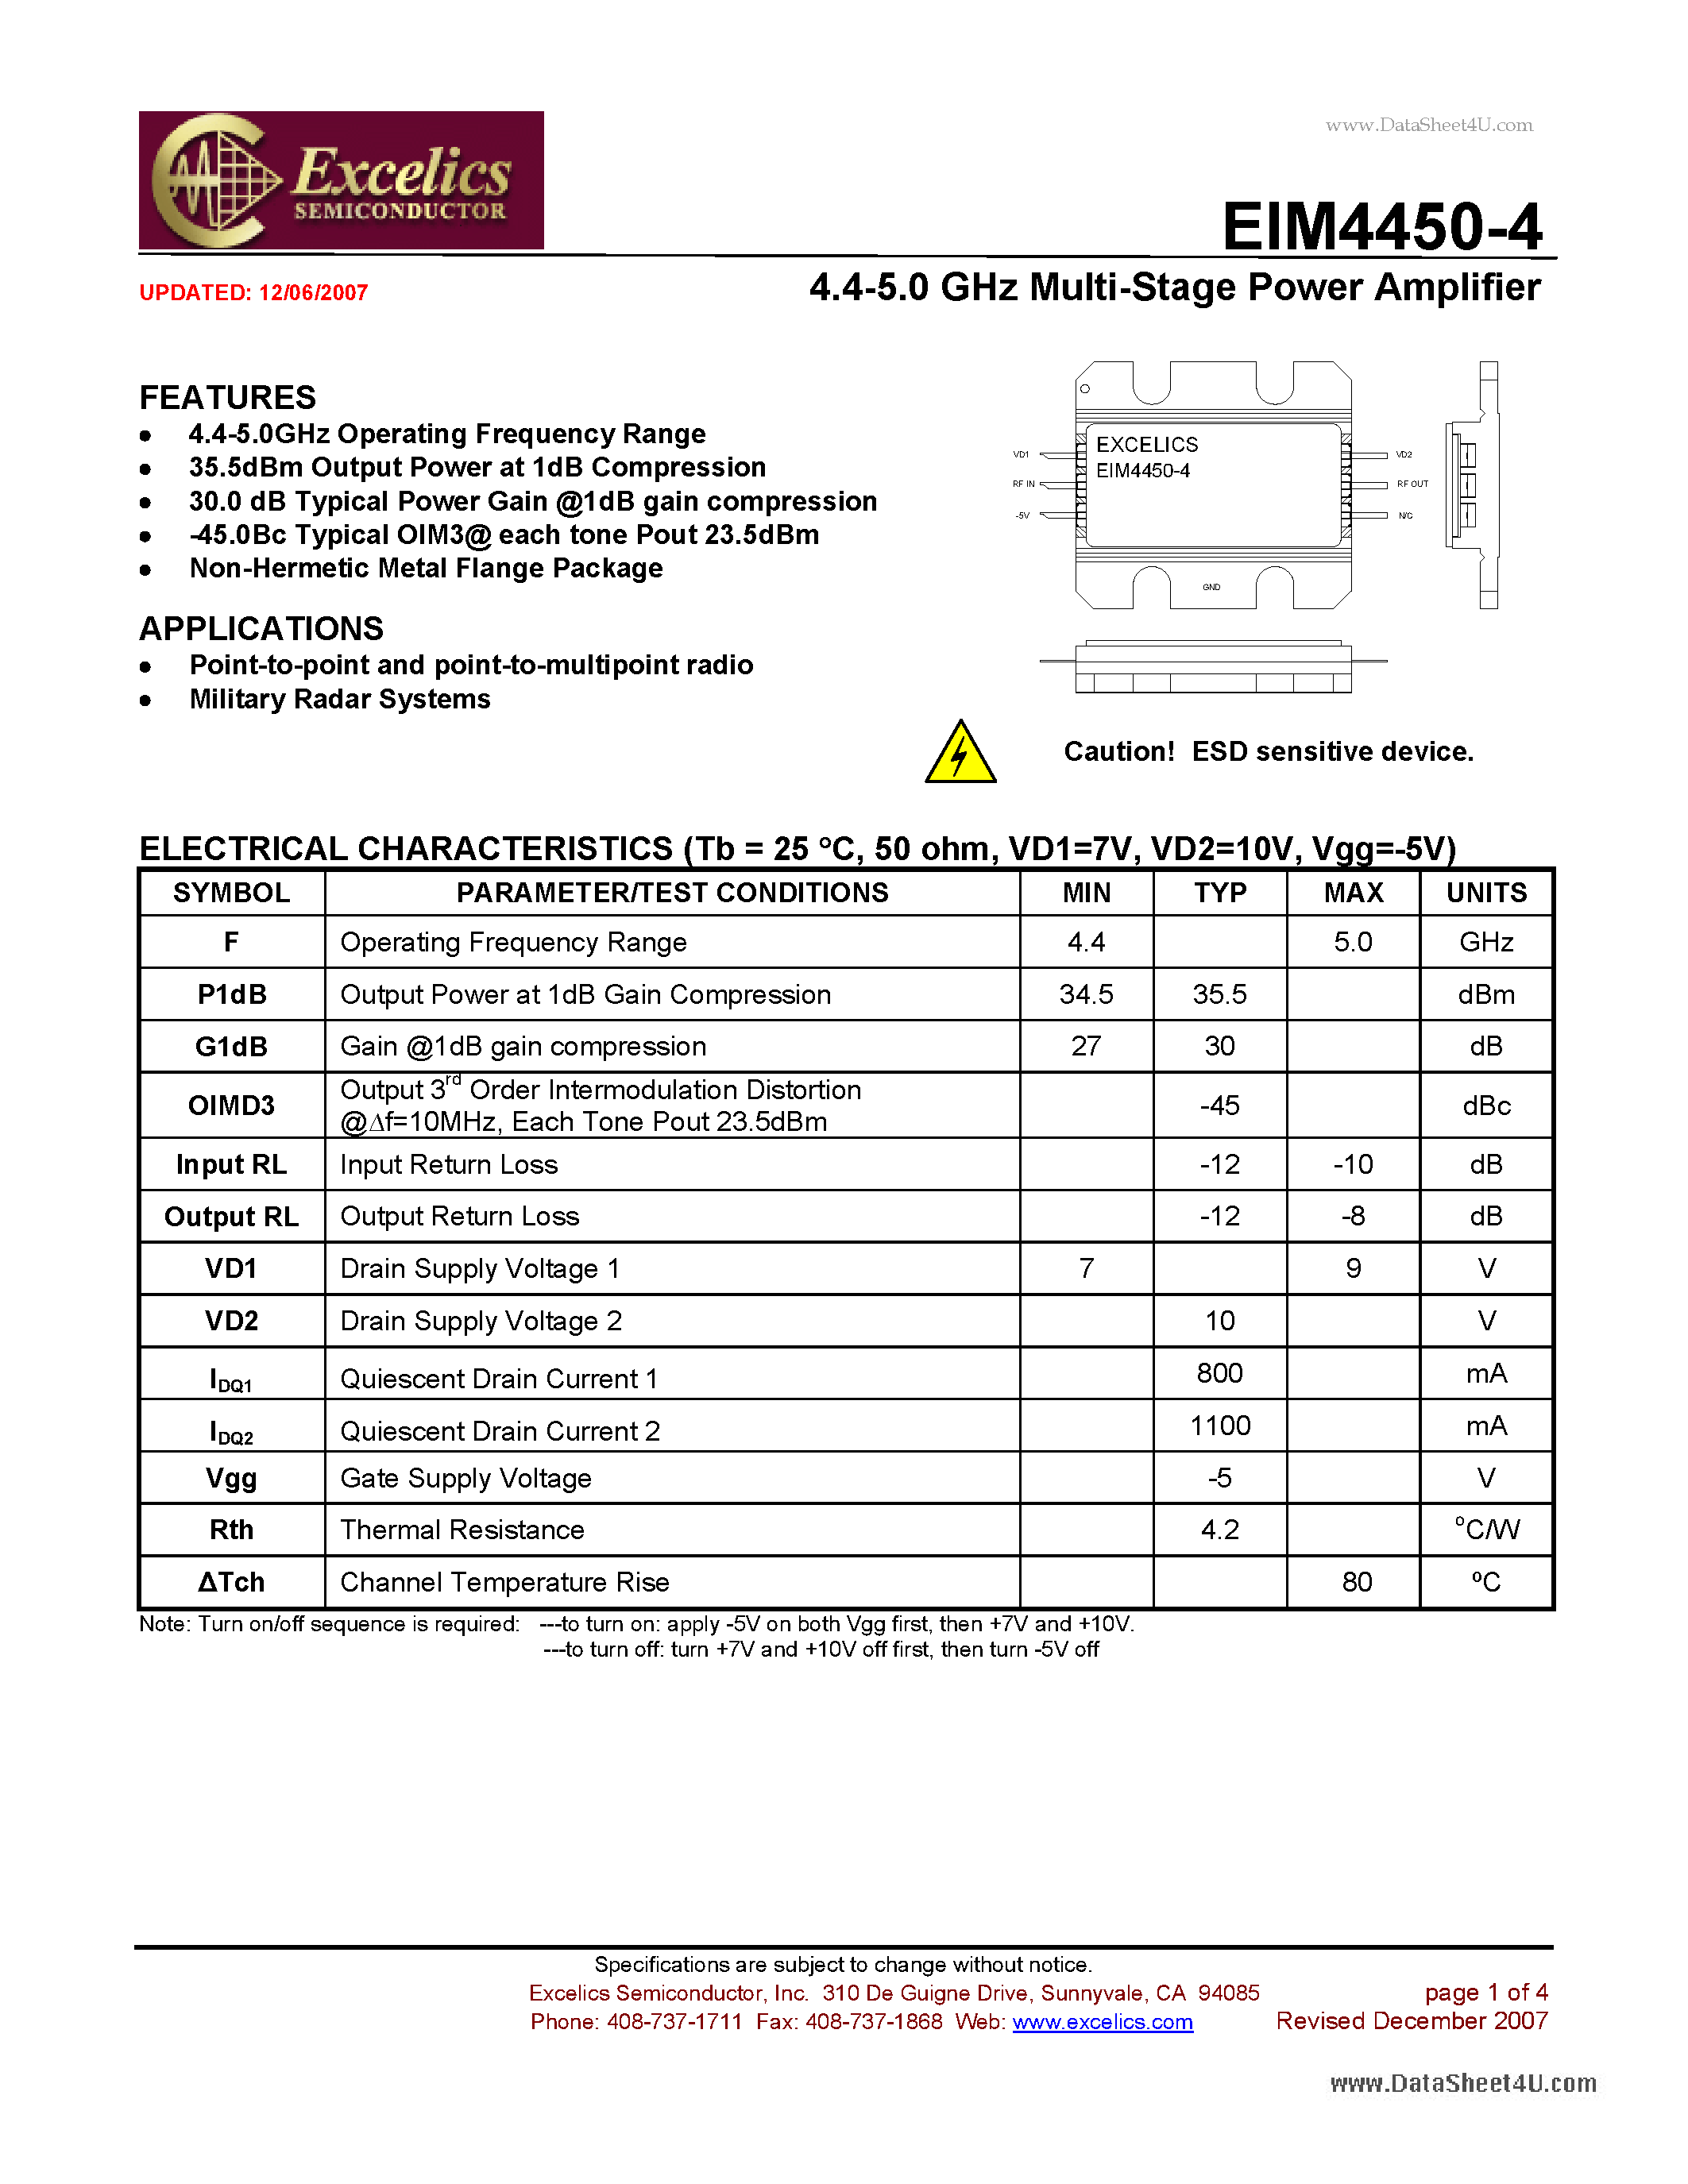 Даташит EIM4450-4 - 4.4-5.0 GHz Multi-Stage Power Amplifier страница 1